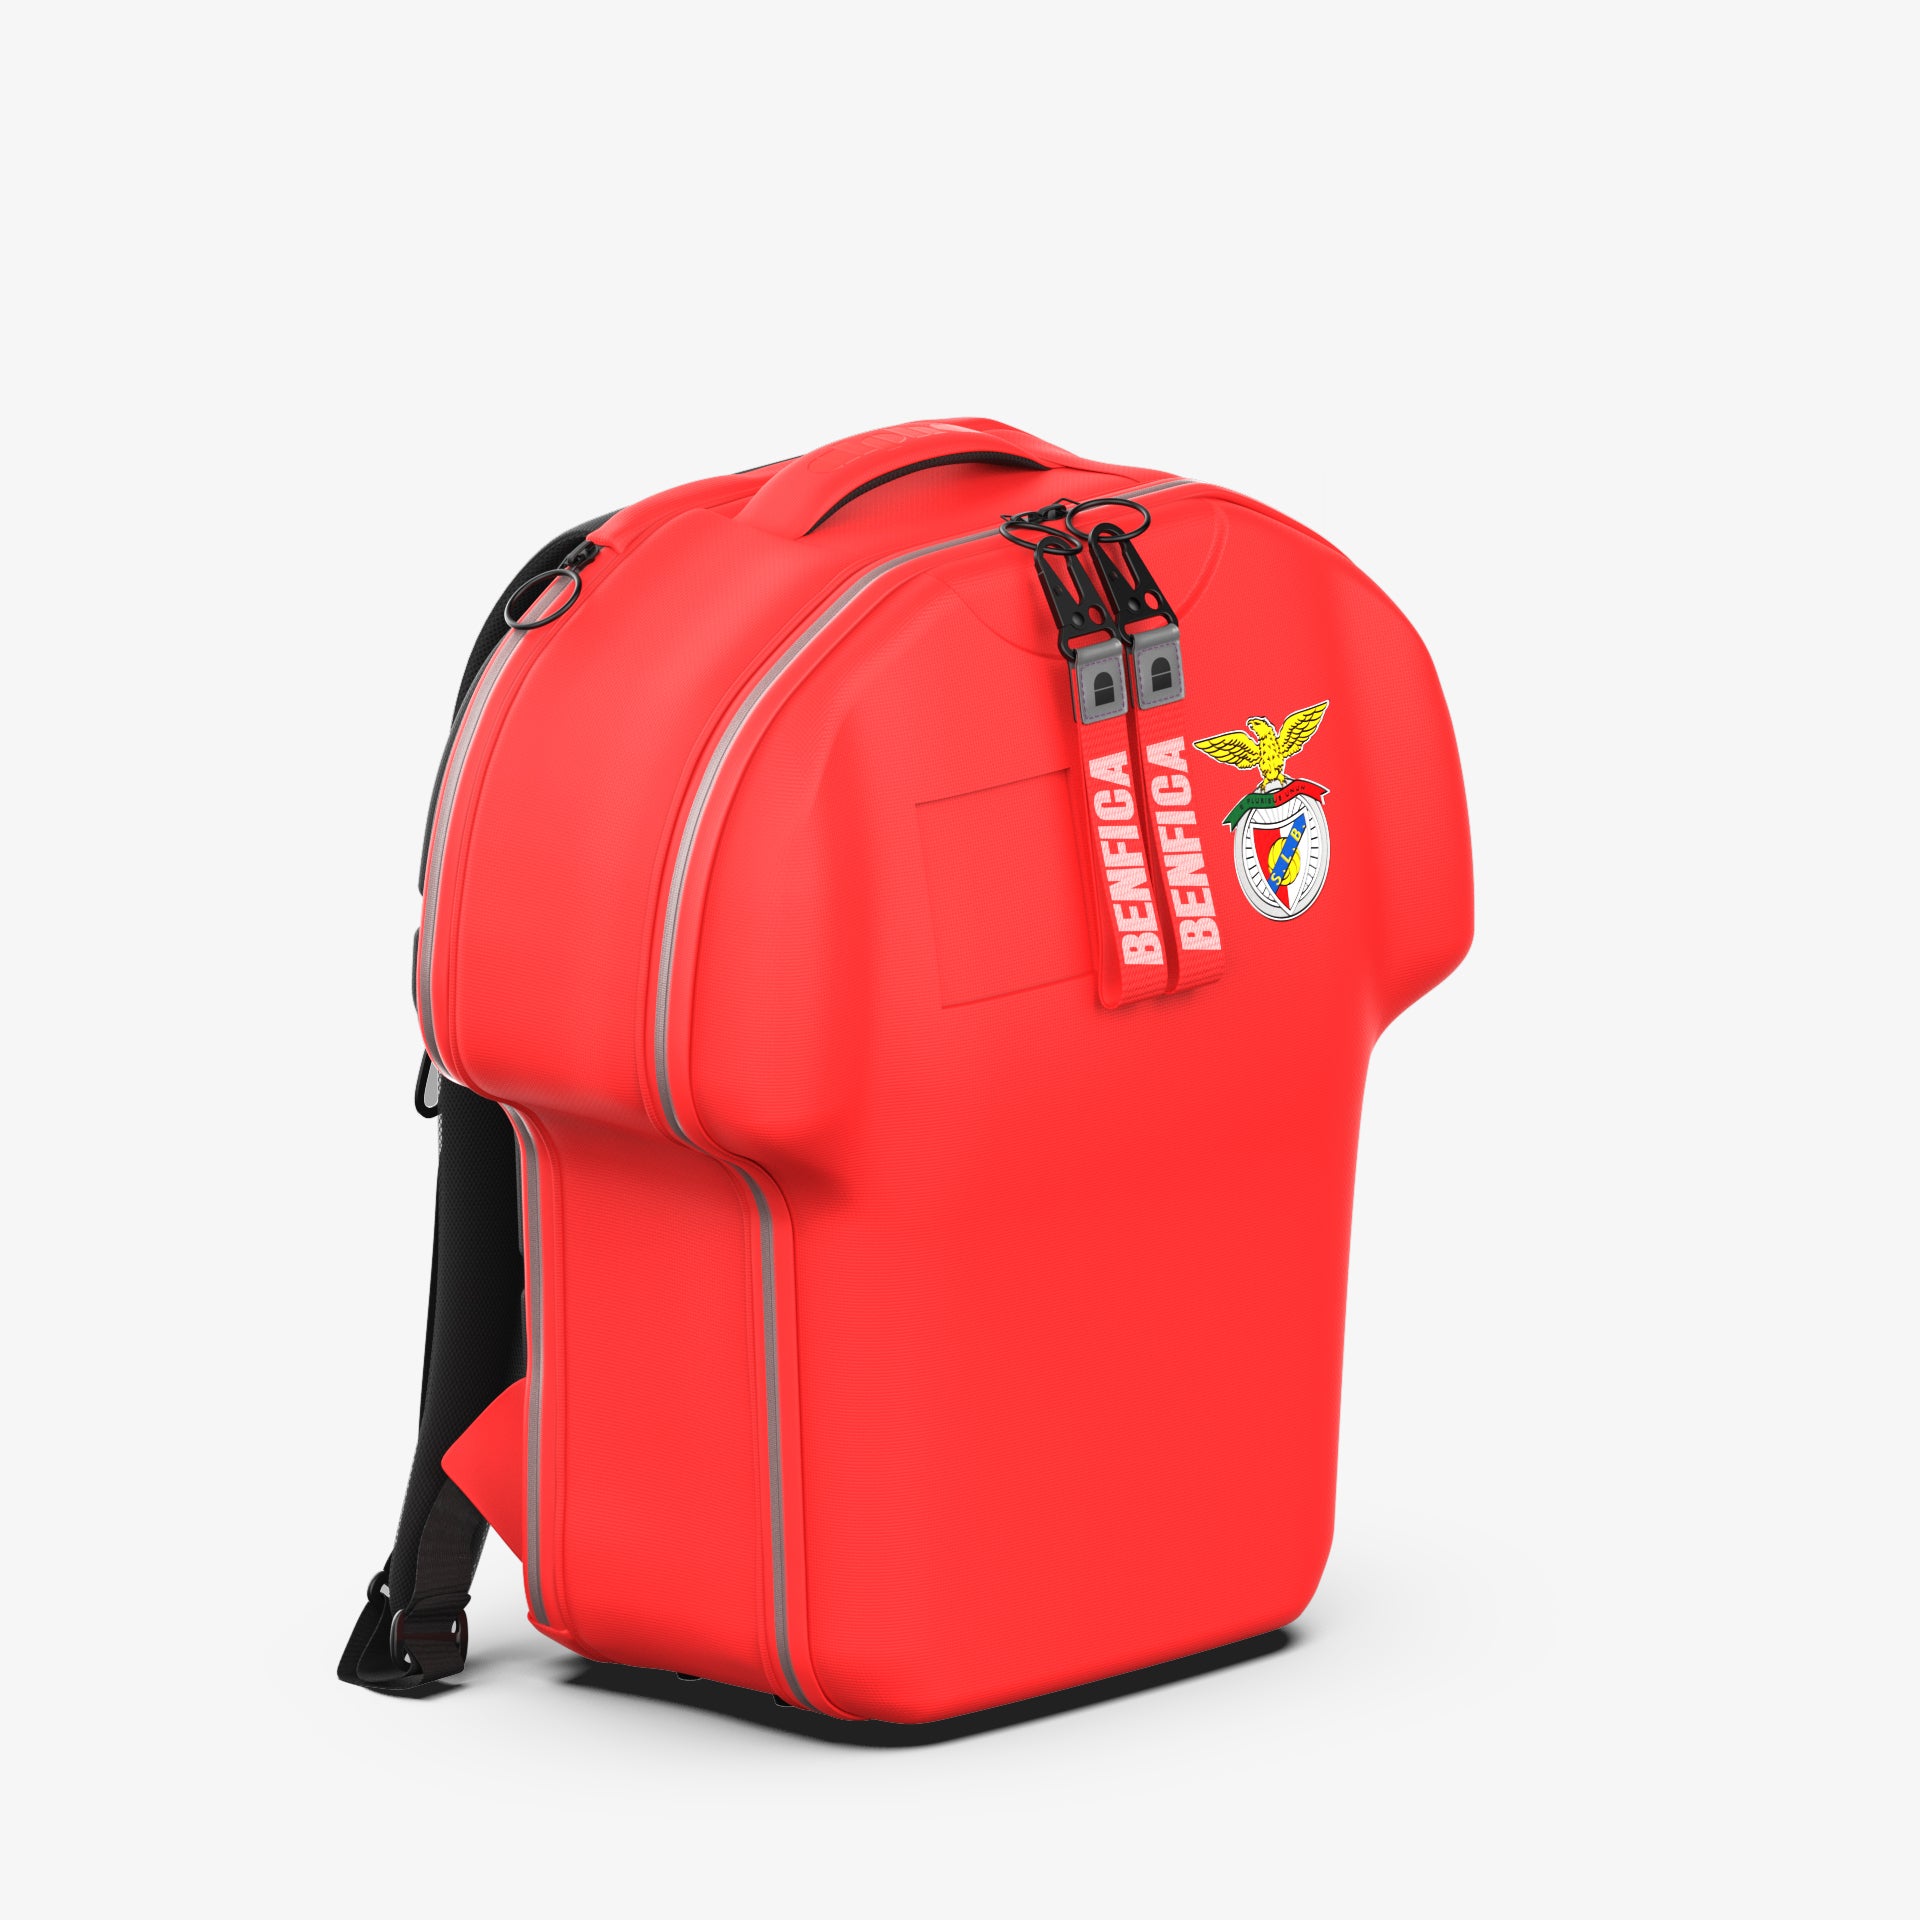 Benfica backpack size medium